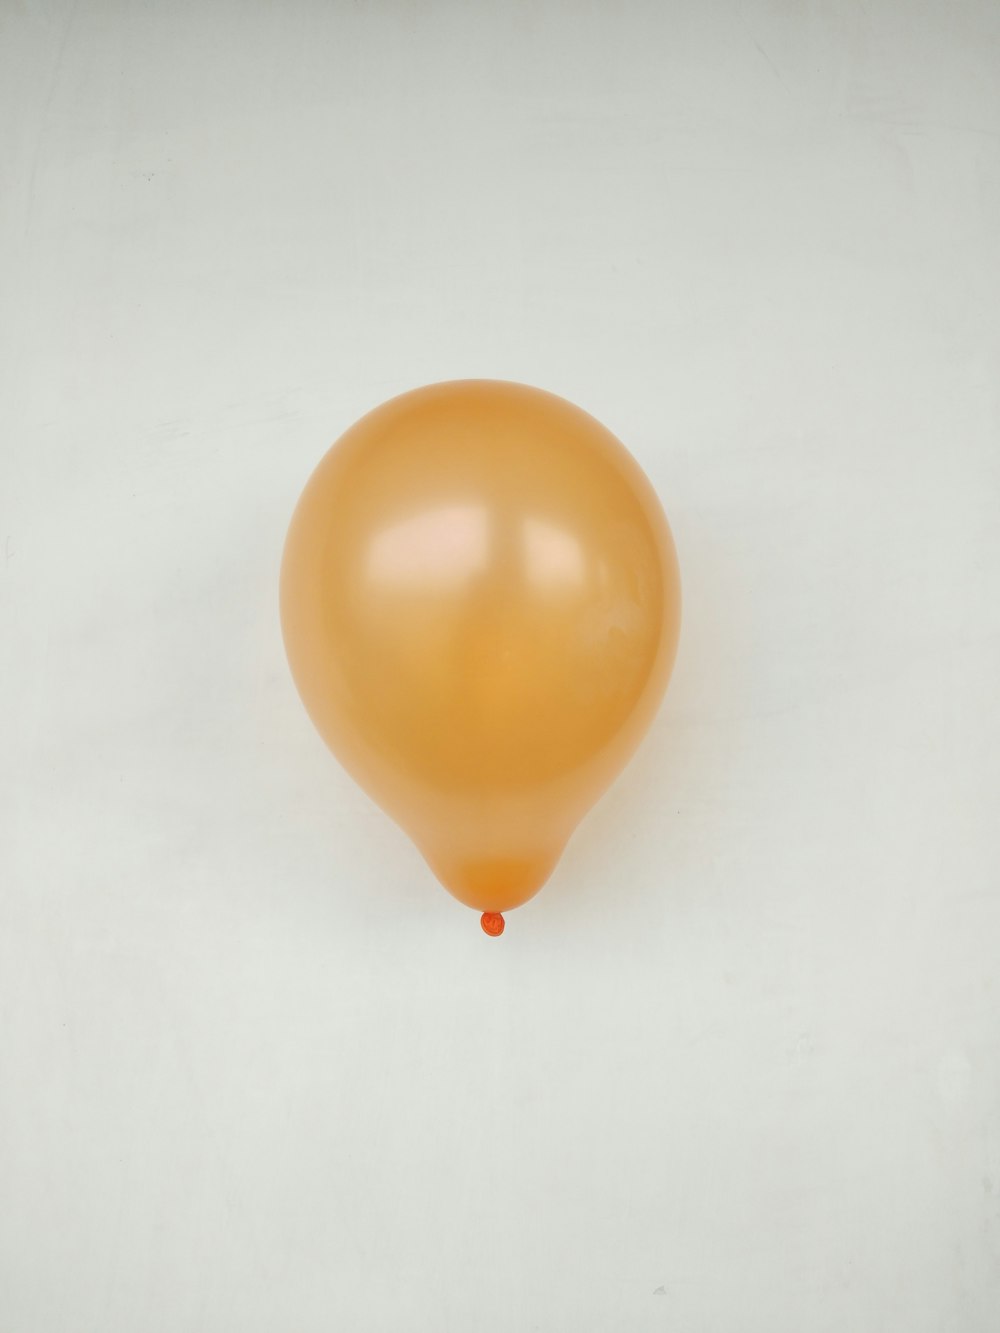 yellow balloon on white surface